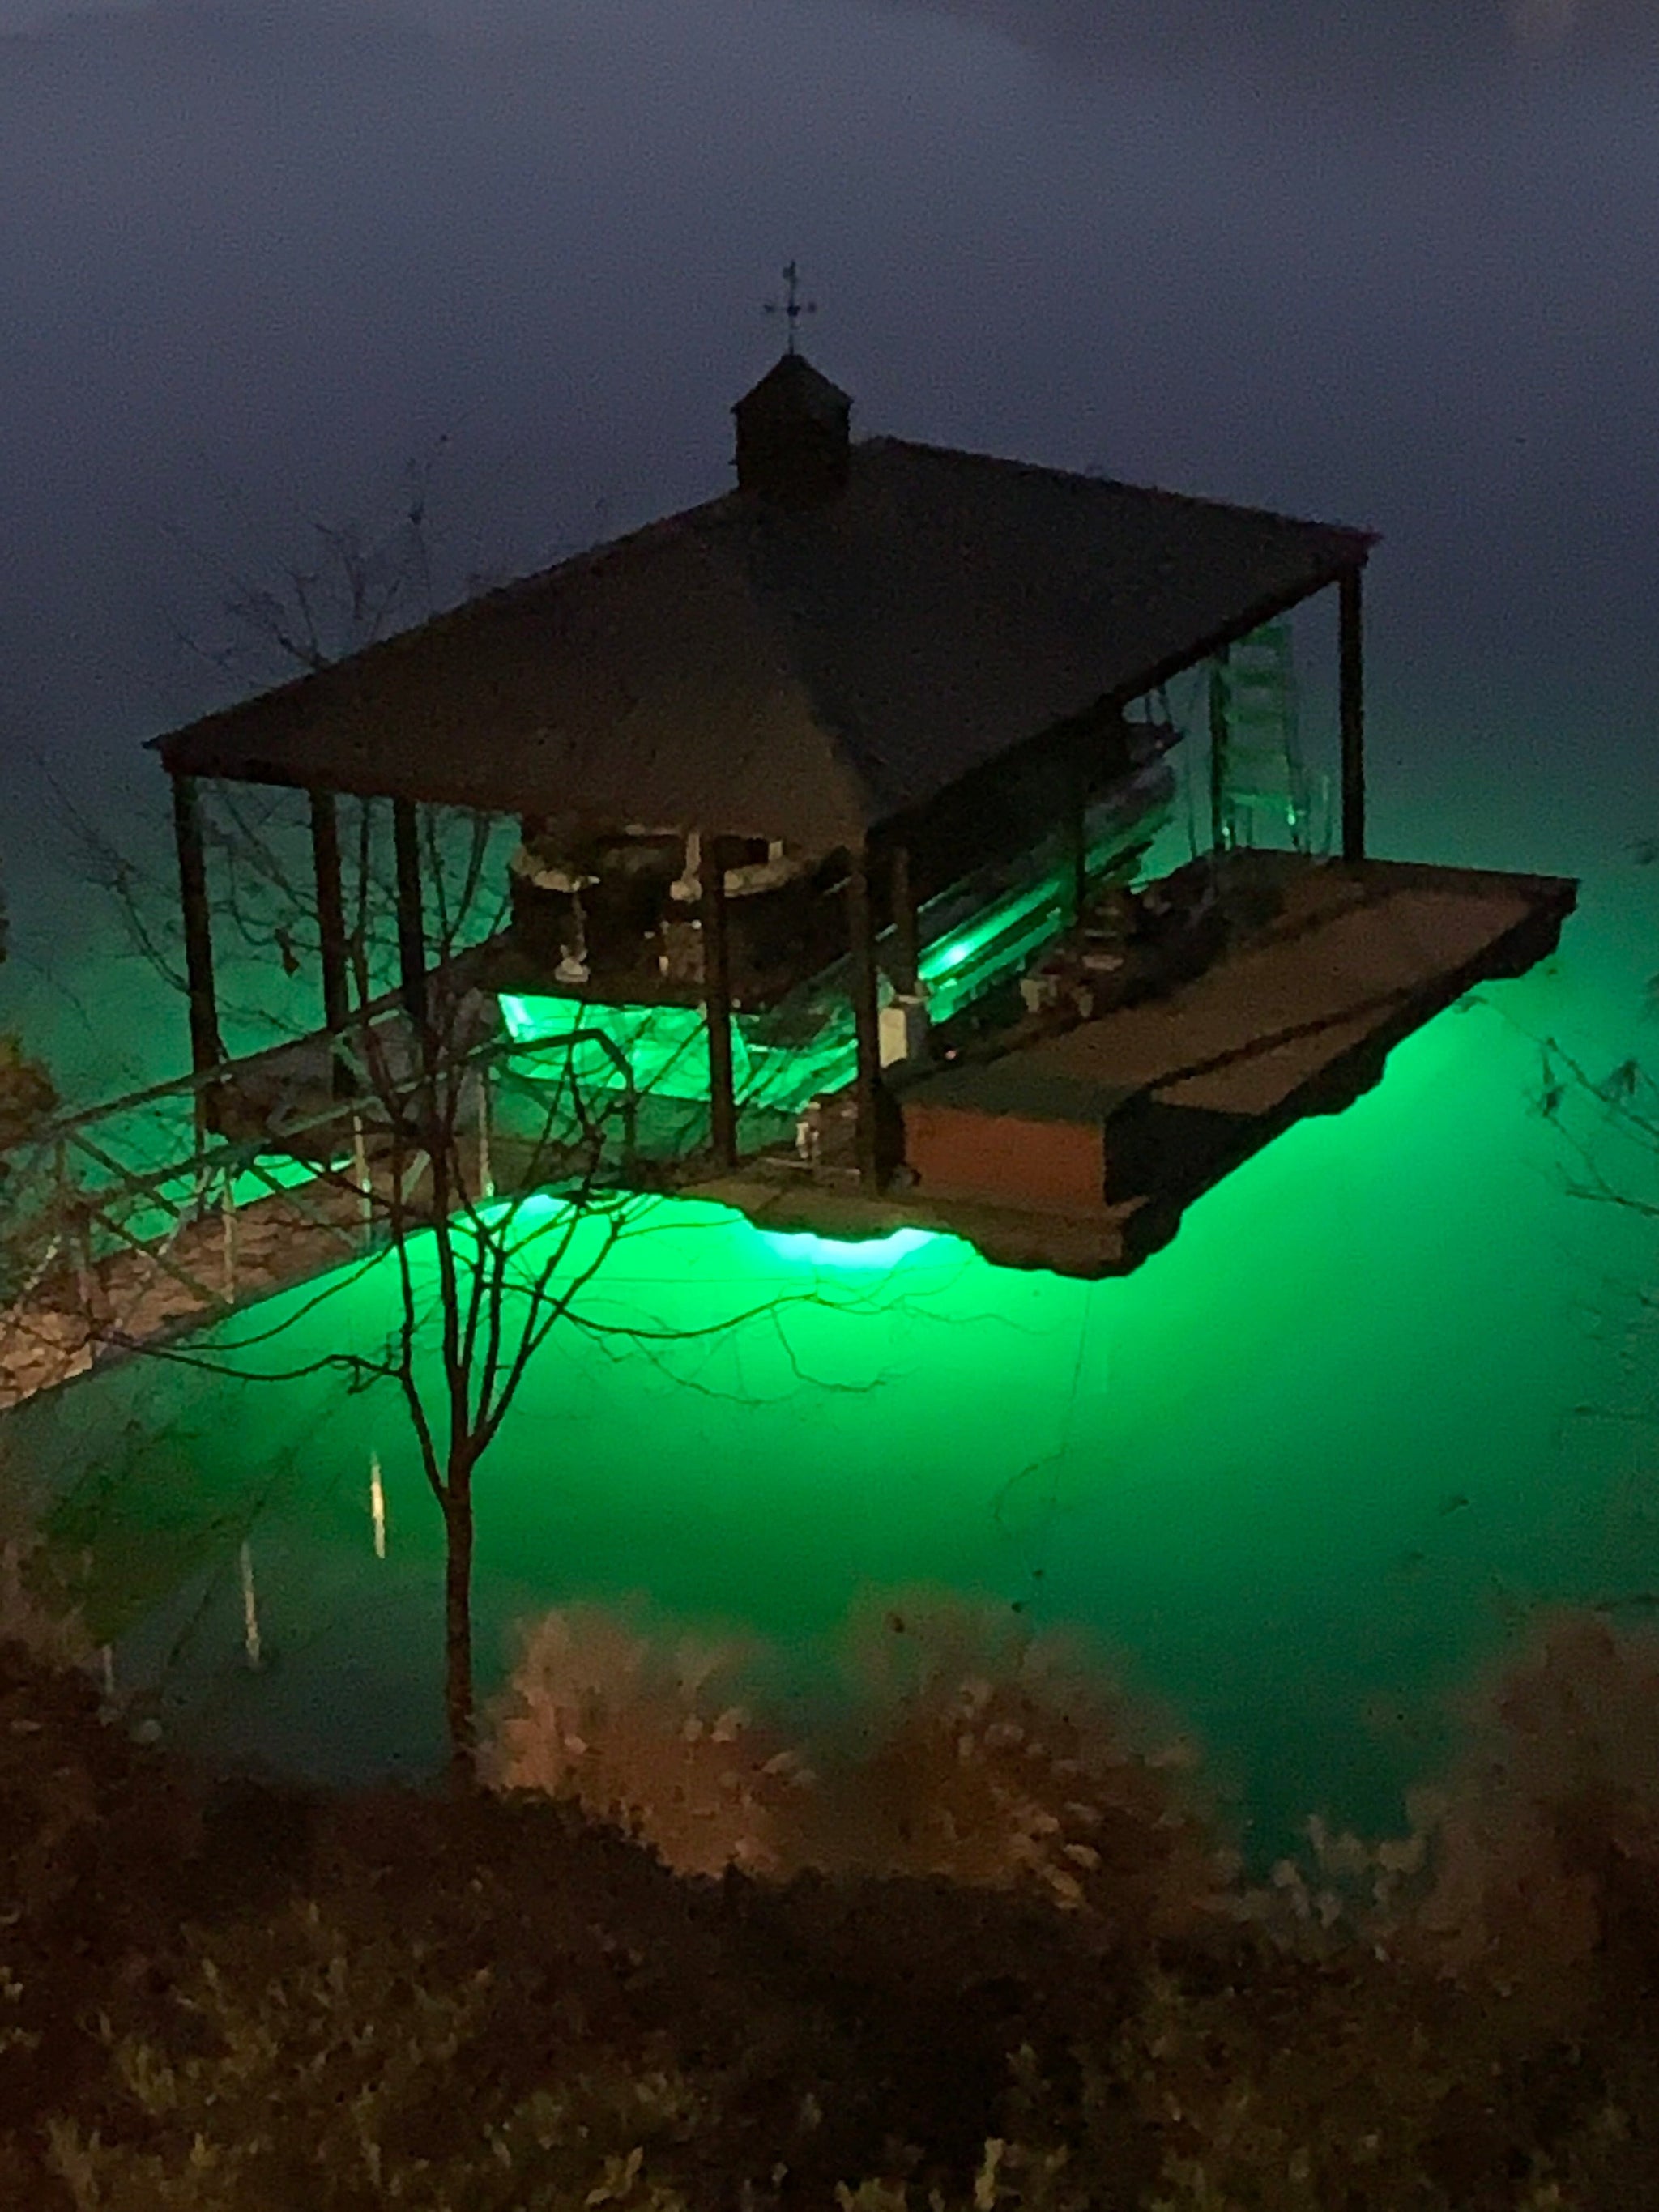 Green Blob Outdoors Multi-Color LED Underwater Fishing Light, 110V  Portable, for Docks, Ponds, or Backyard Pools (Multi-Color 15000 Lumen)